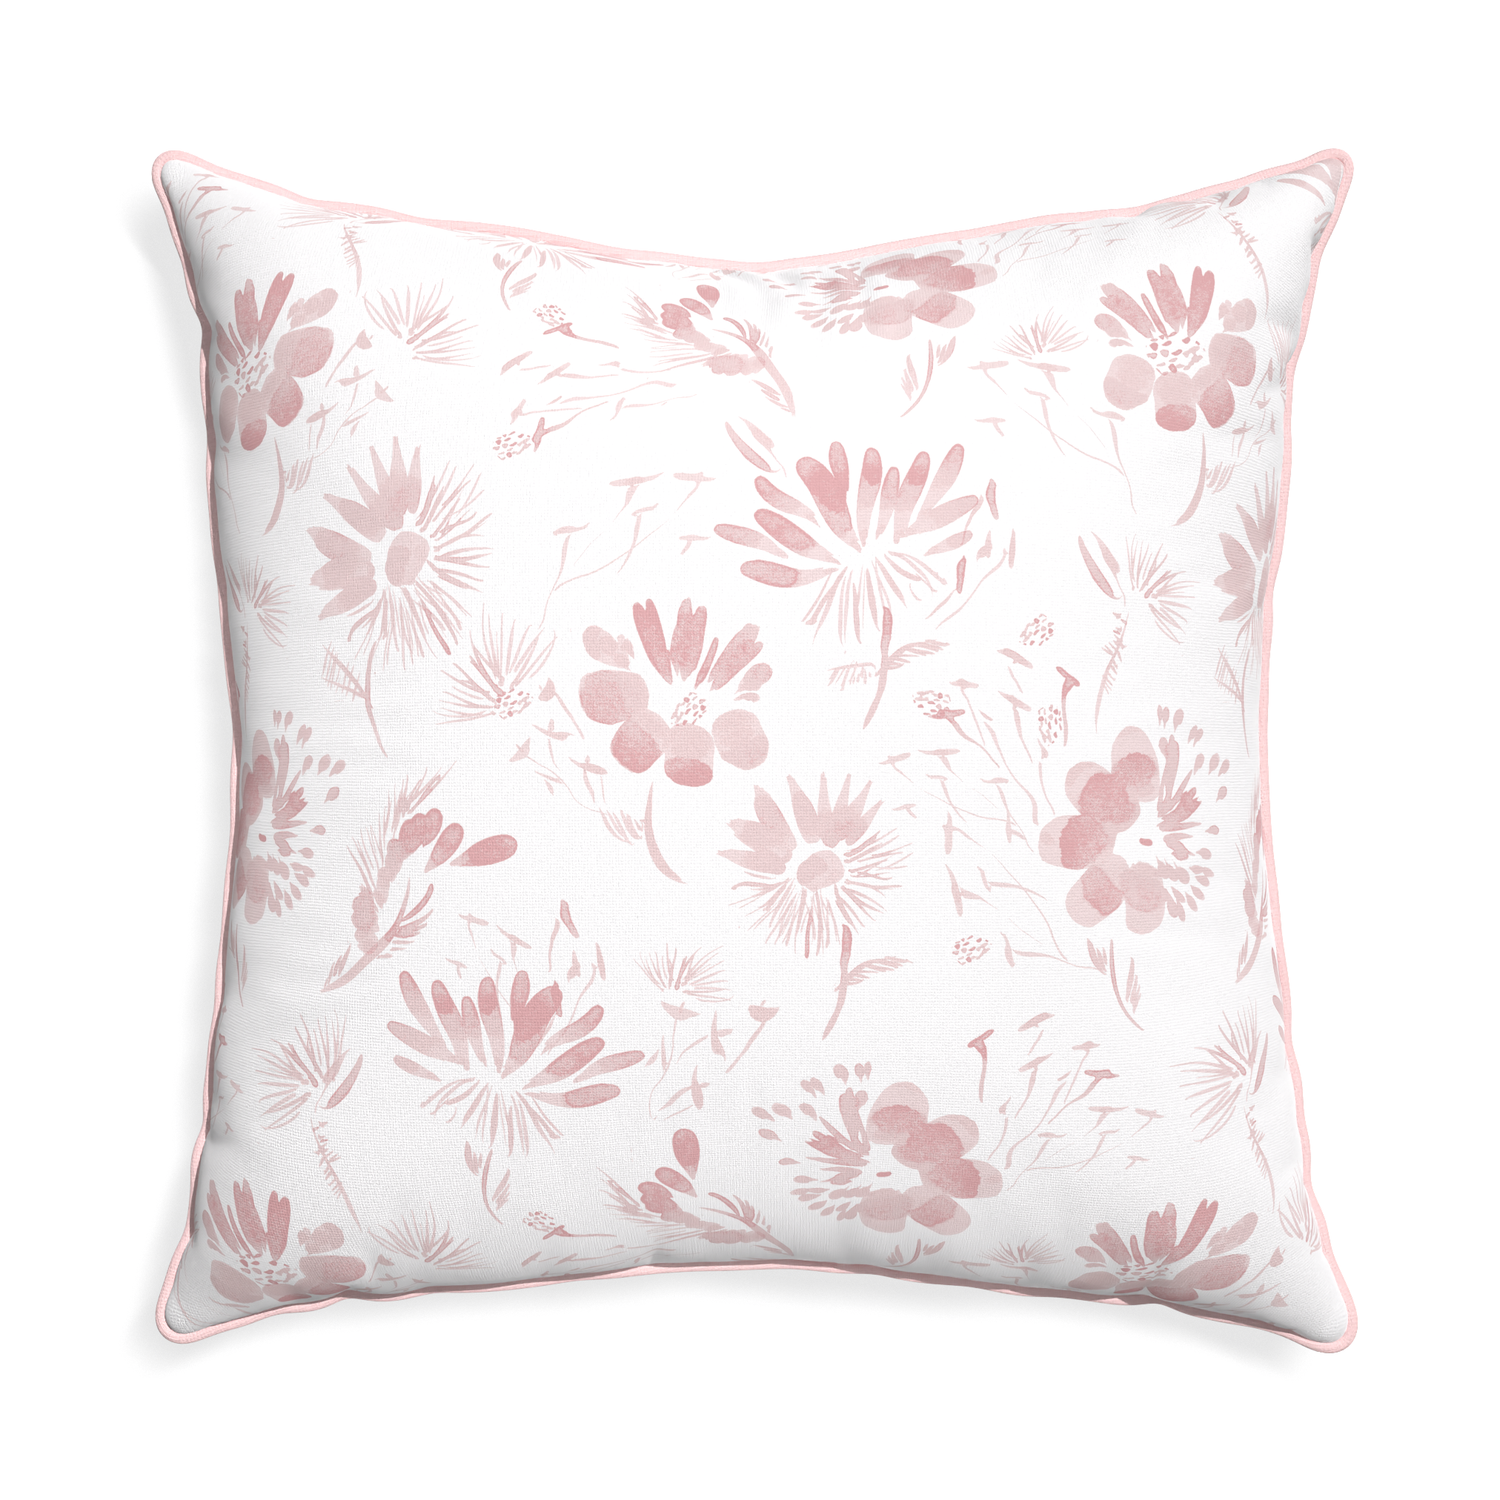 Euro-sham blake custom pillow with petal piping on white background